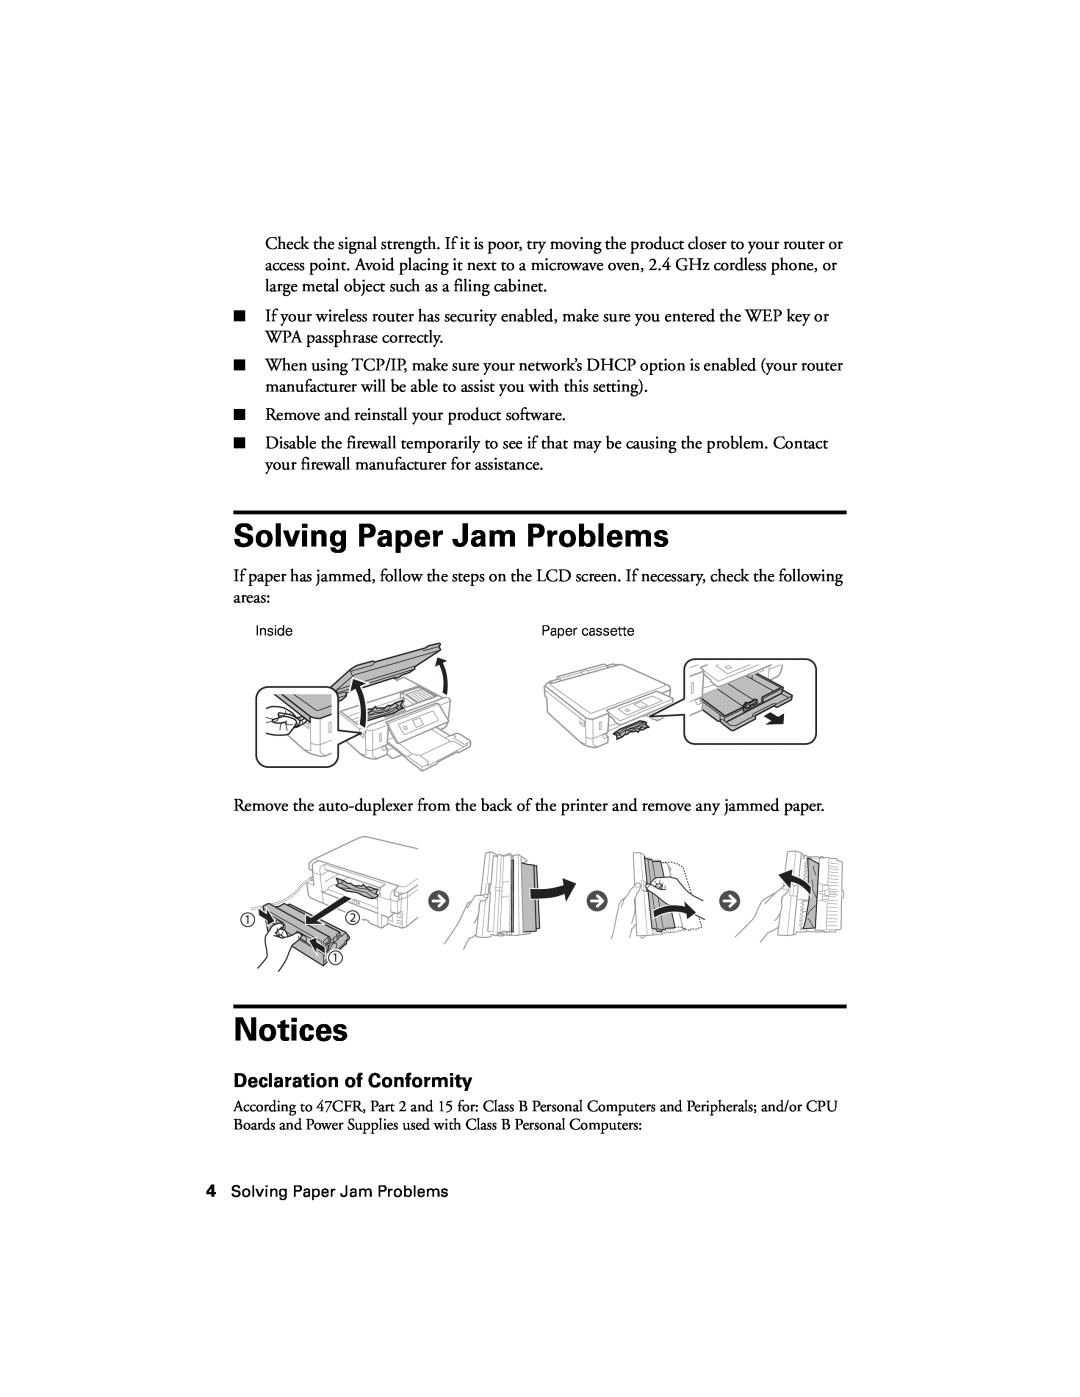 Epson XP-520 manual Solving Paper Jam Problems, Notices, Declaration of Conformity 